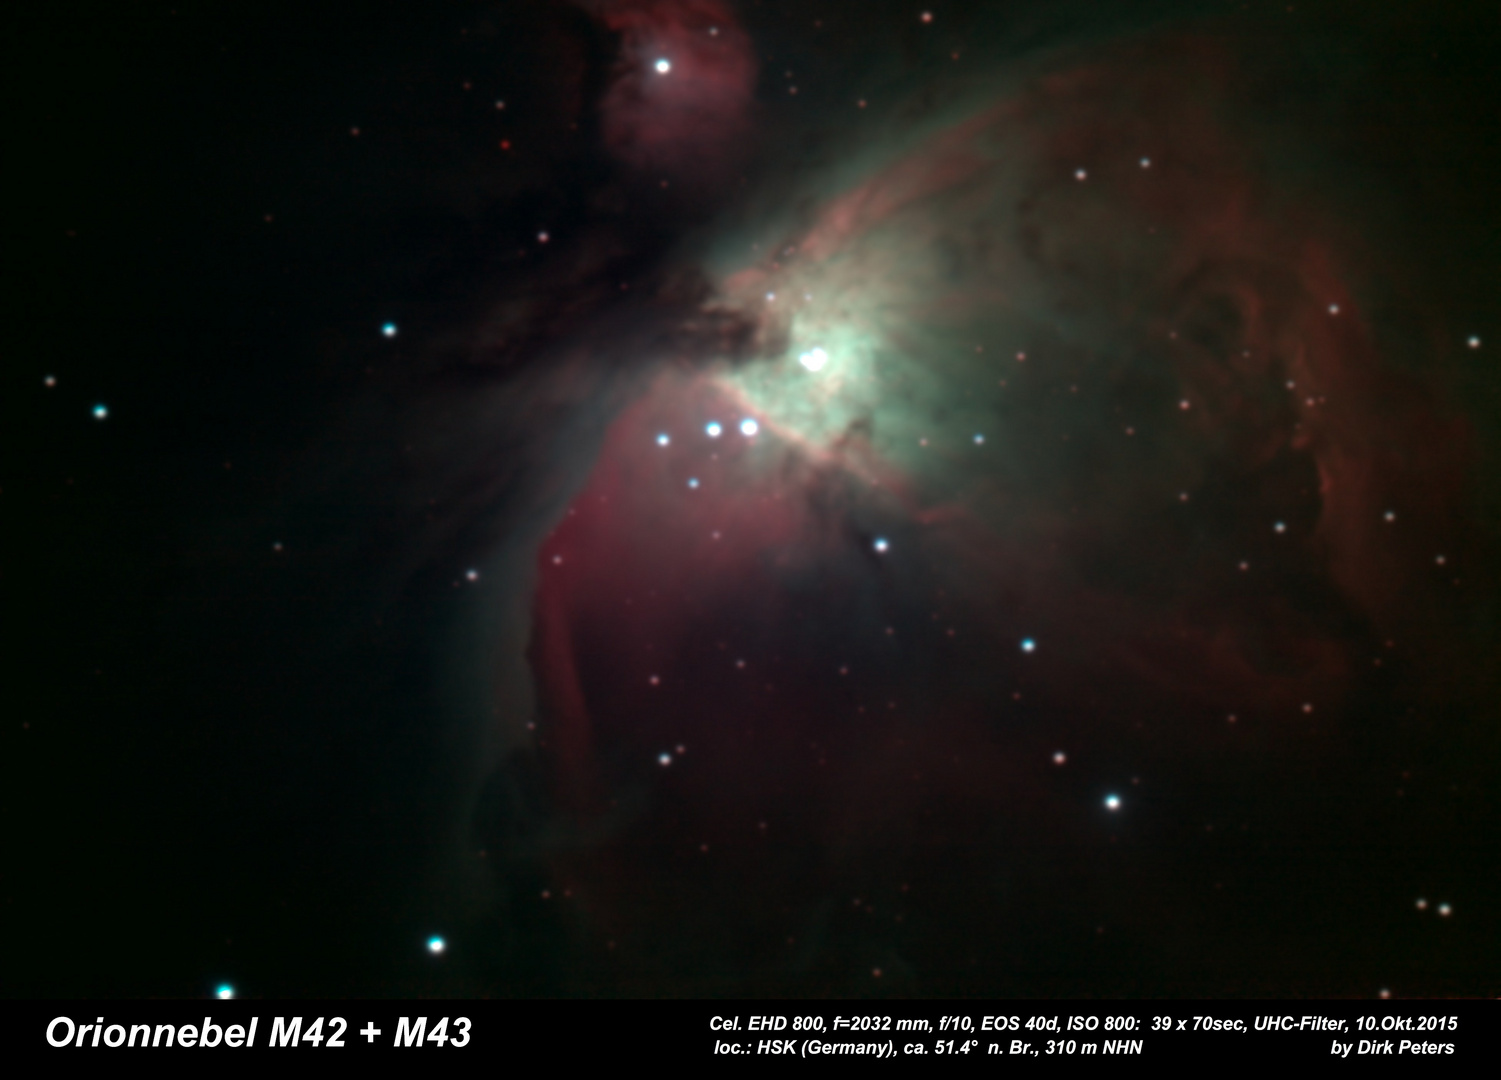 ORION-NEBEL M42 + M43